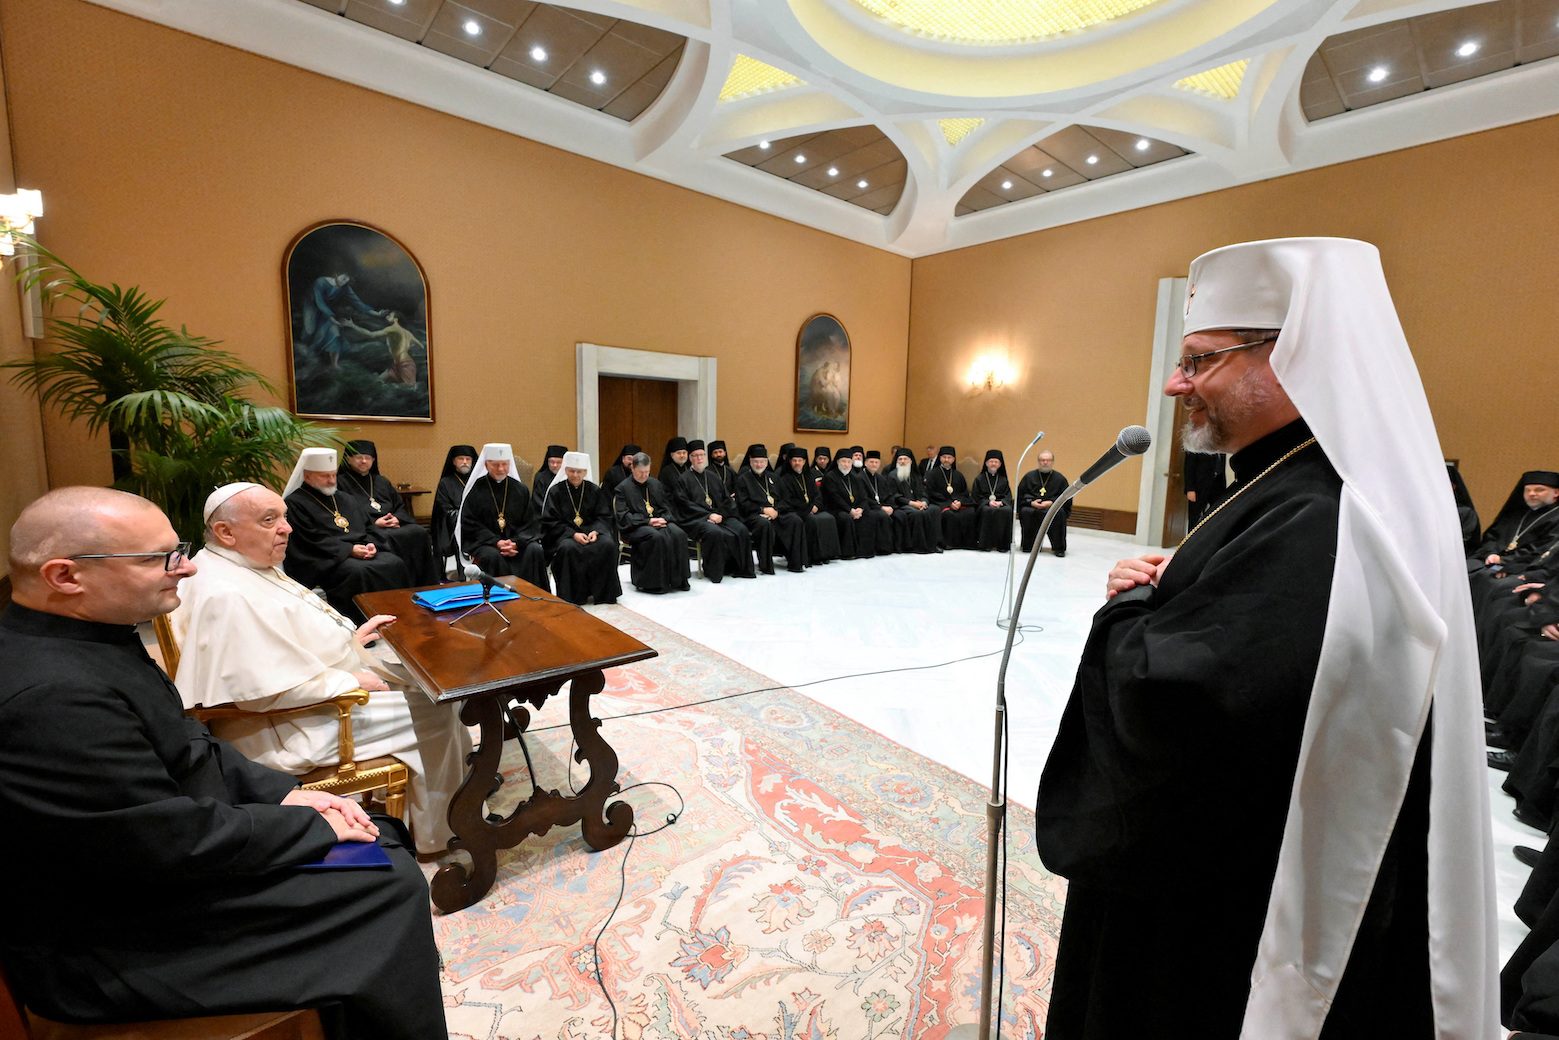 Ukrainian Catholic bishops rebuke Pope over his Russia comments